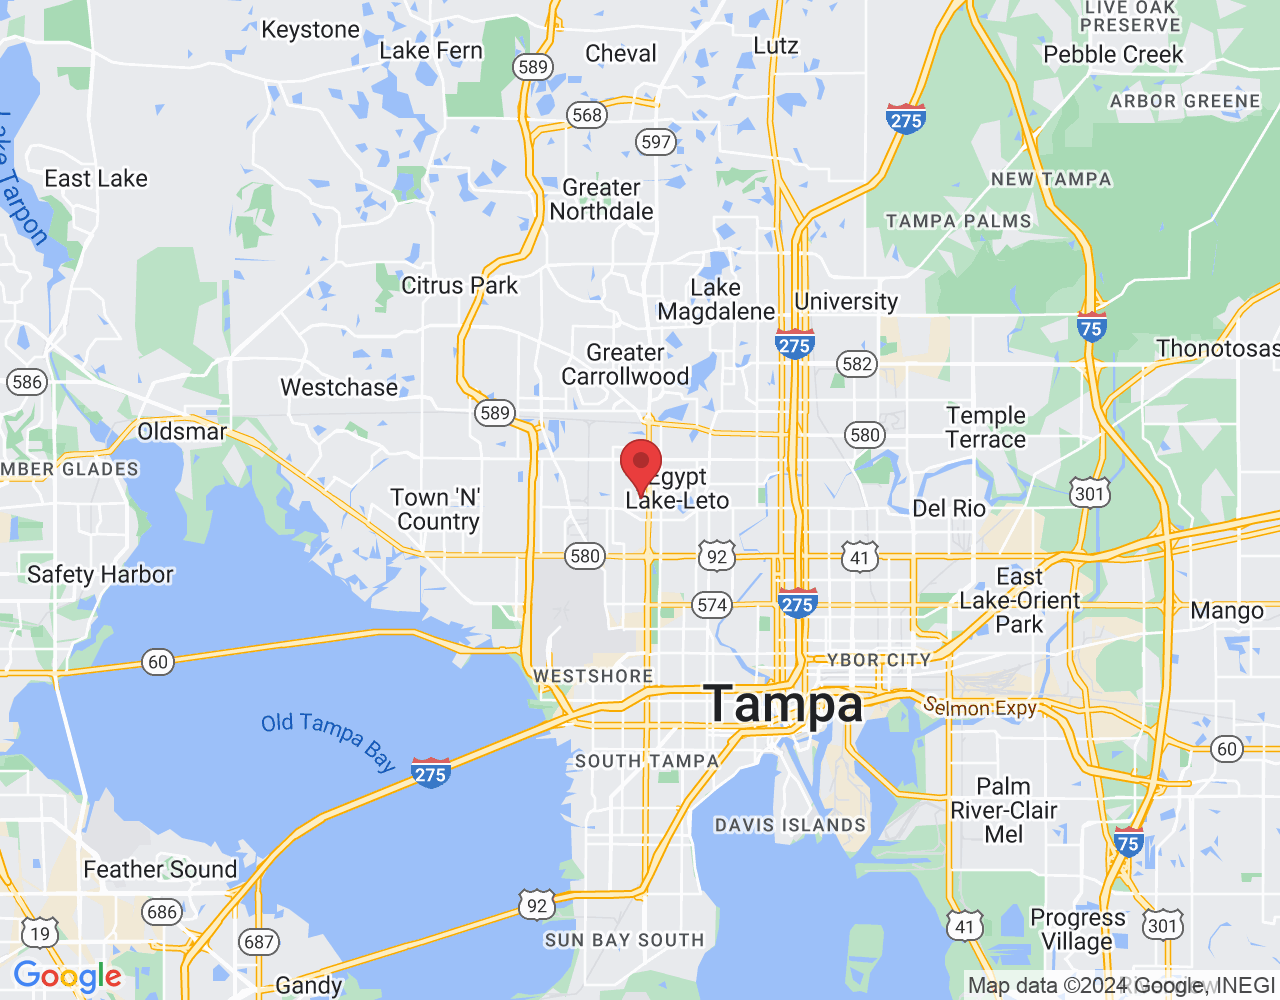 Tampa, FL 33614, USA